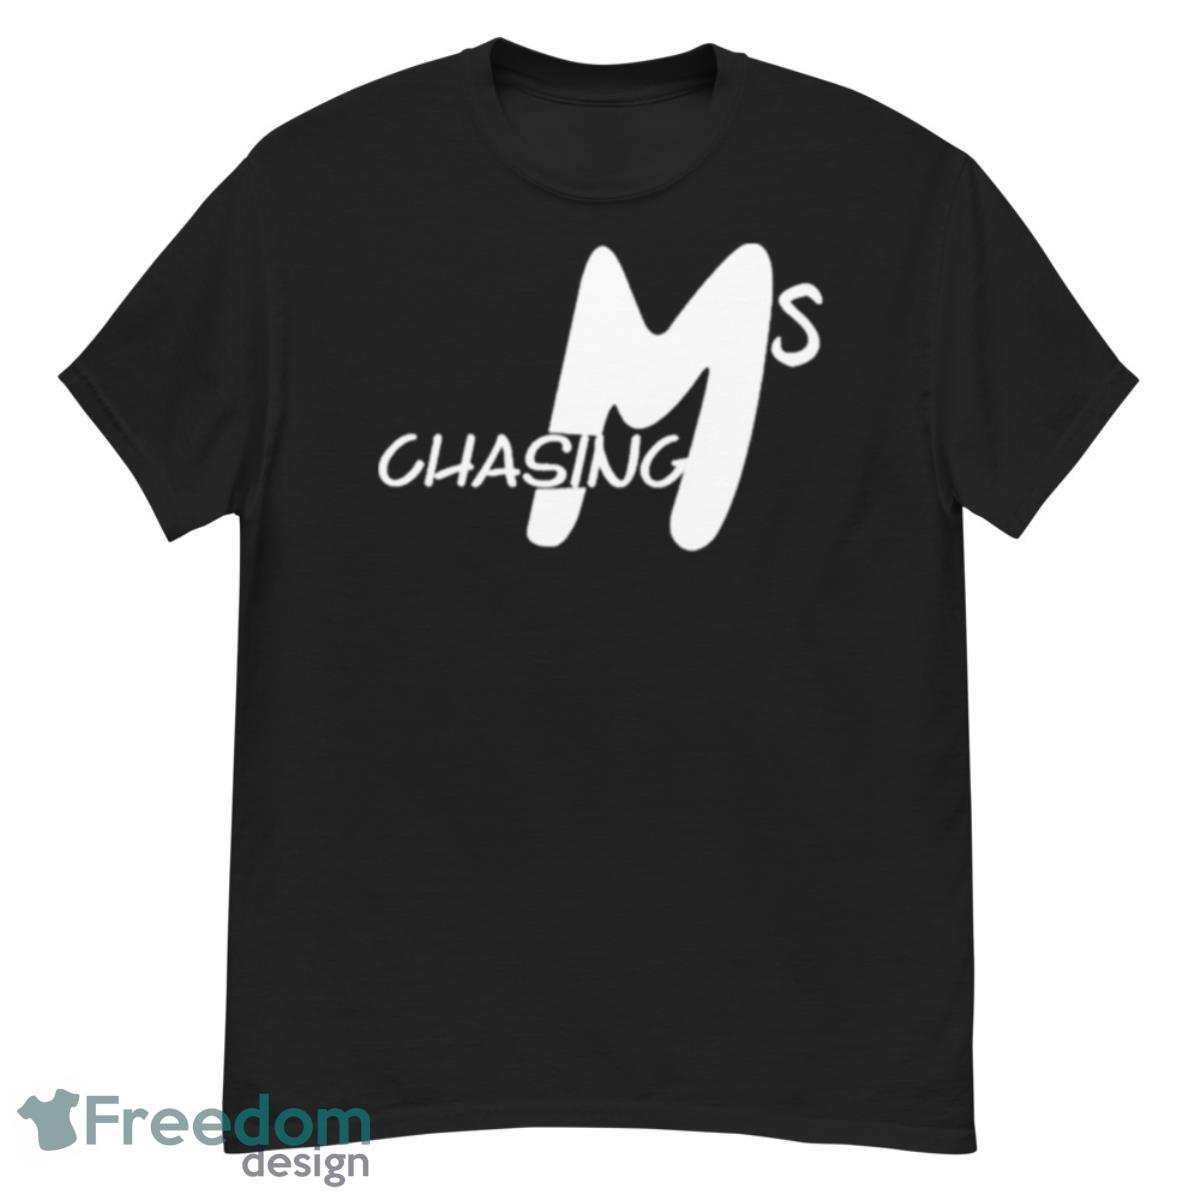 Chasing Ms Shirt - G500 Men’s Classic T-Shirt